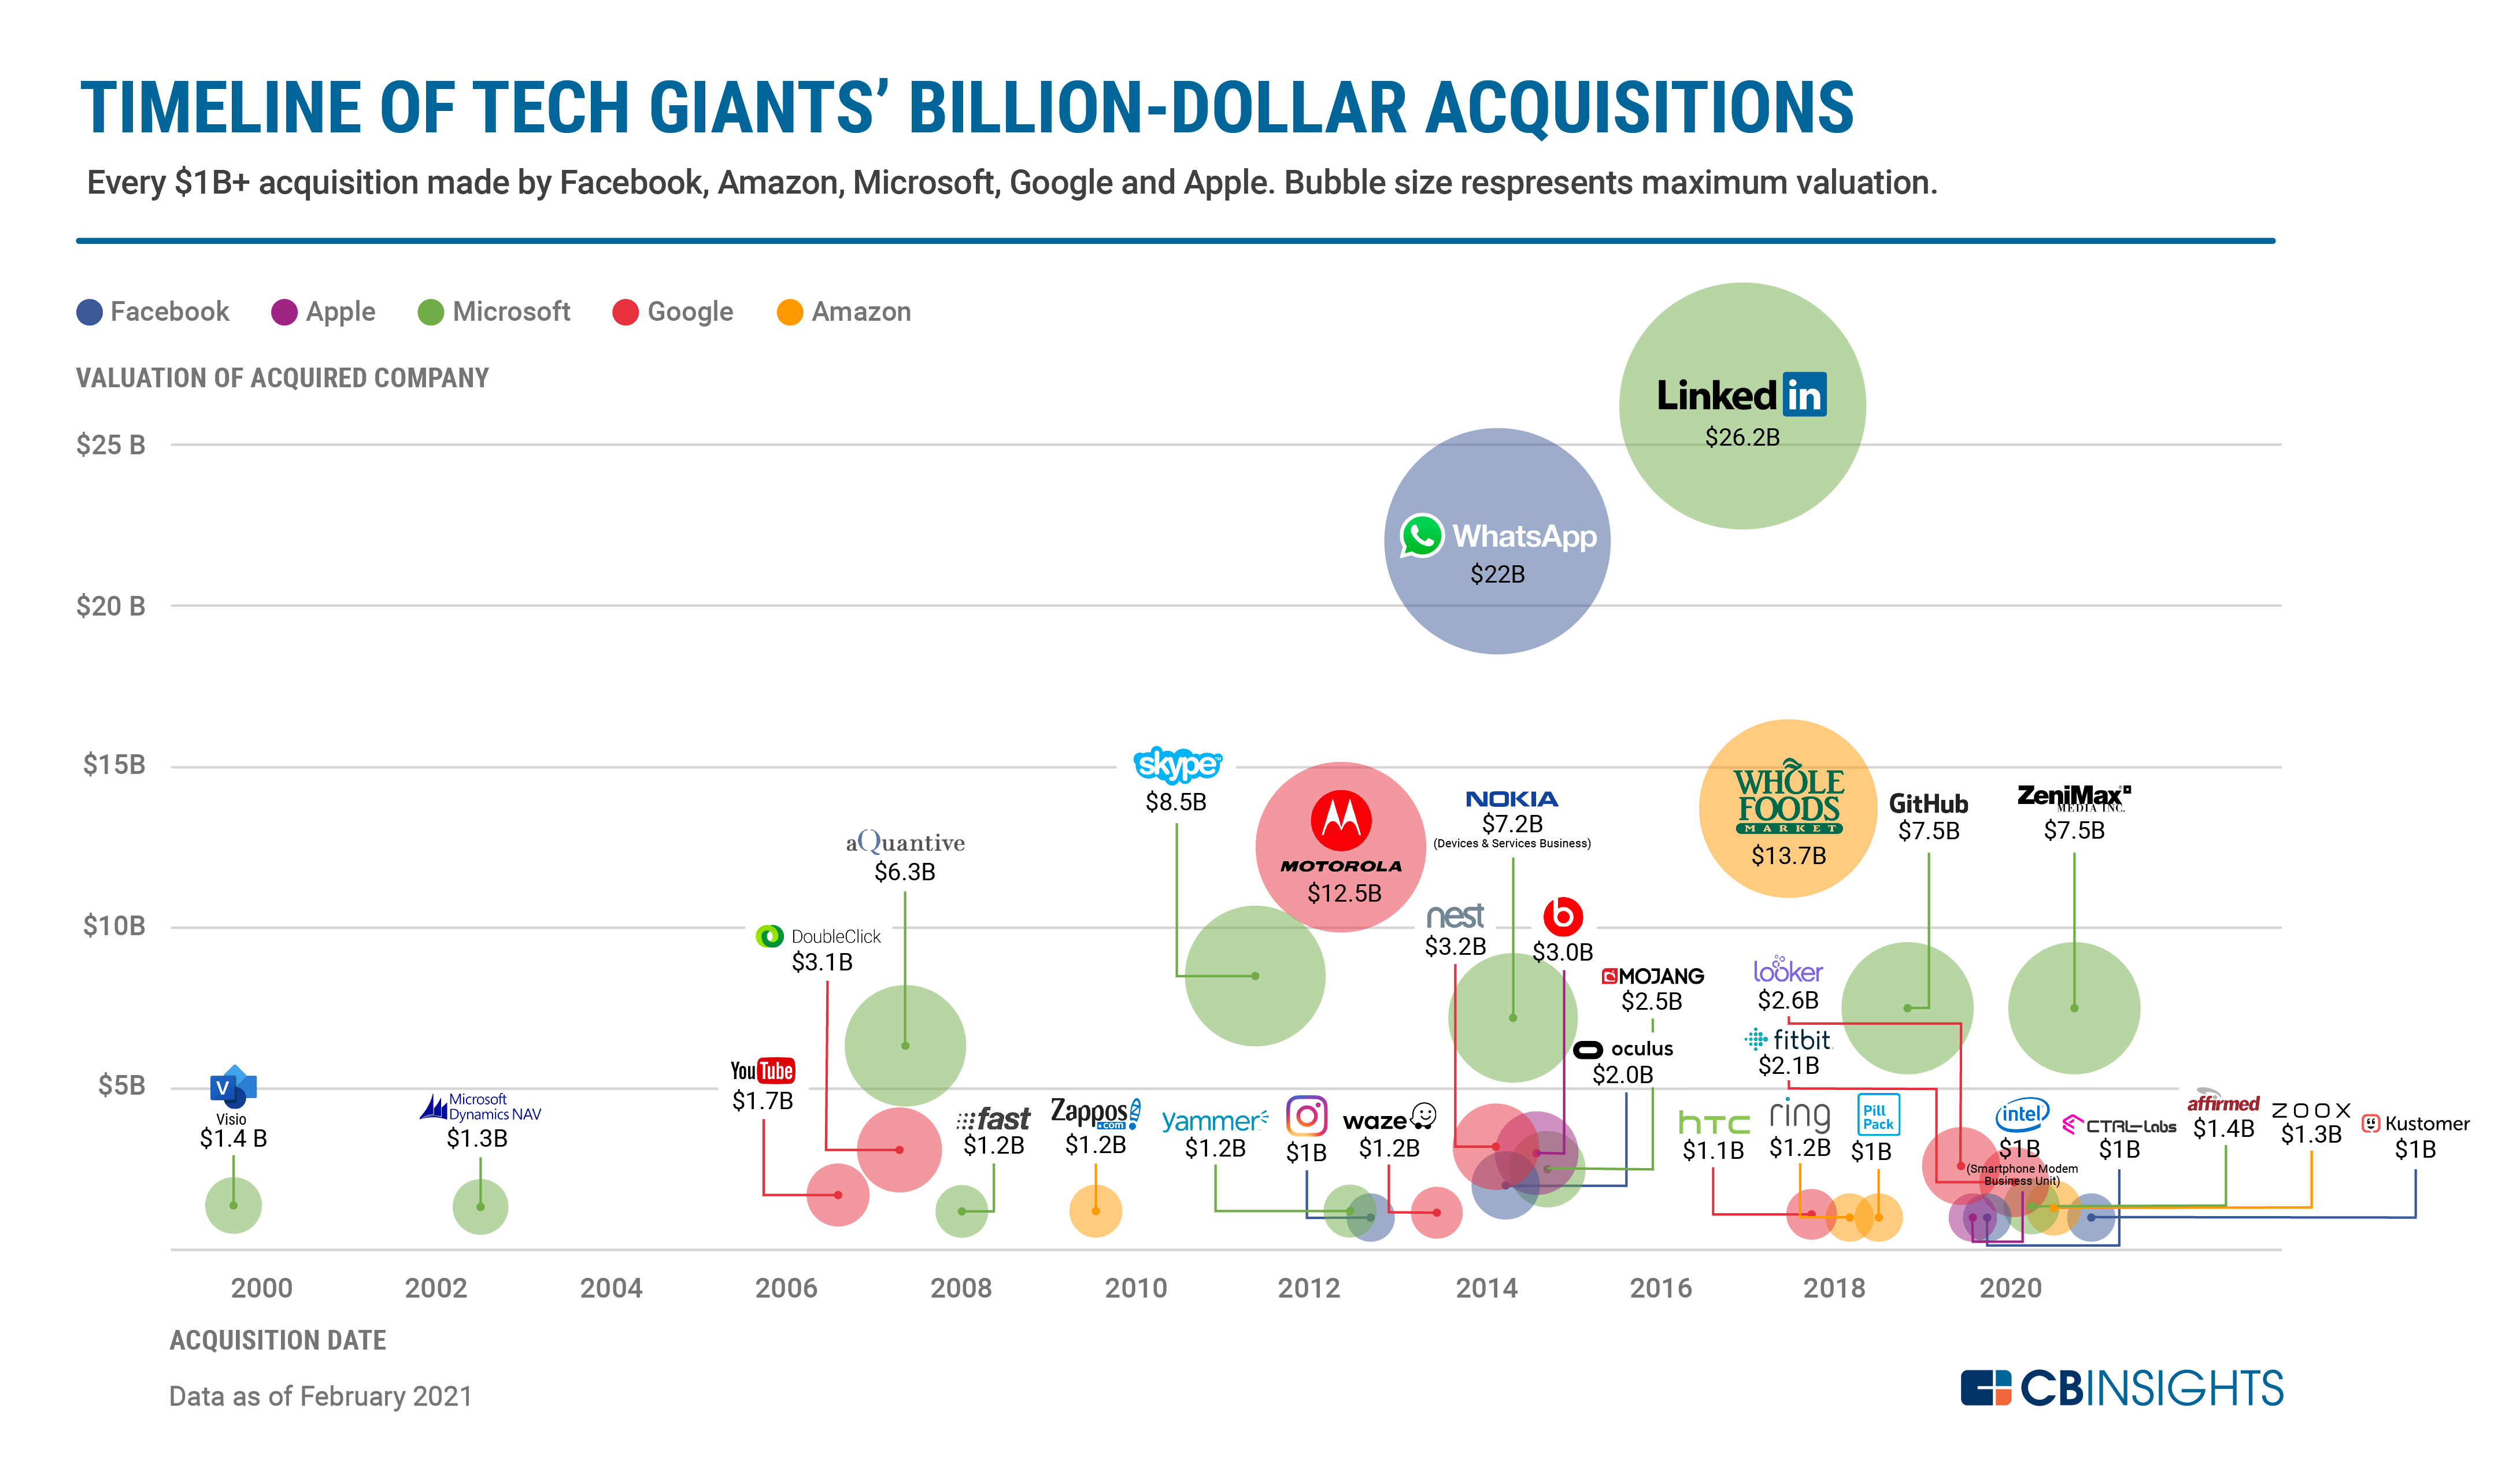 Visualizing Tech Giants' BillionDollar Acquisitions